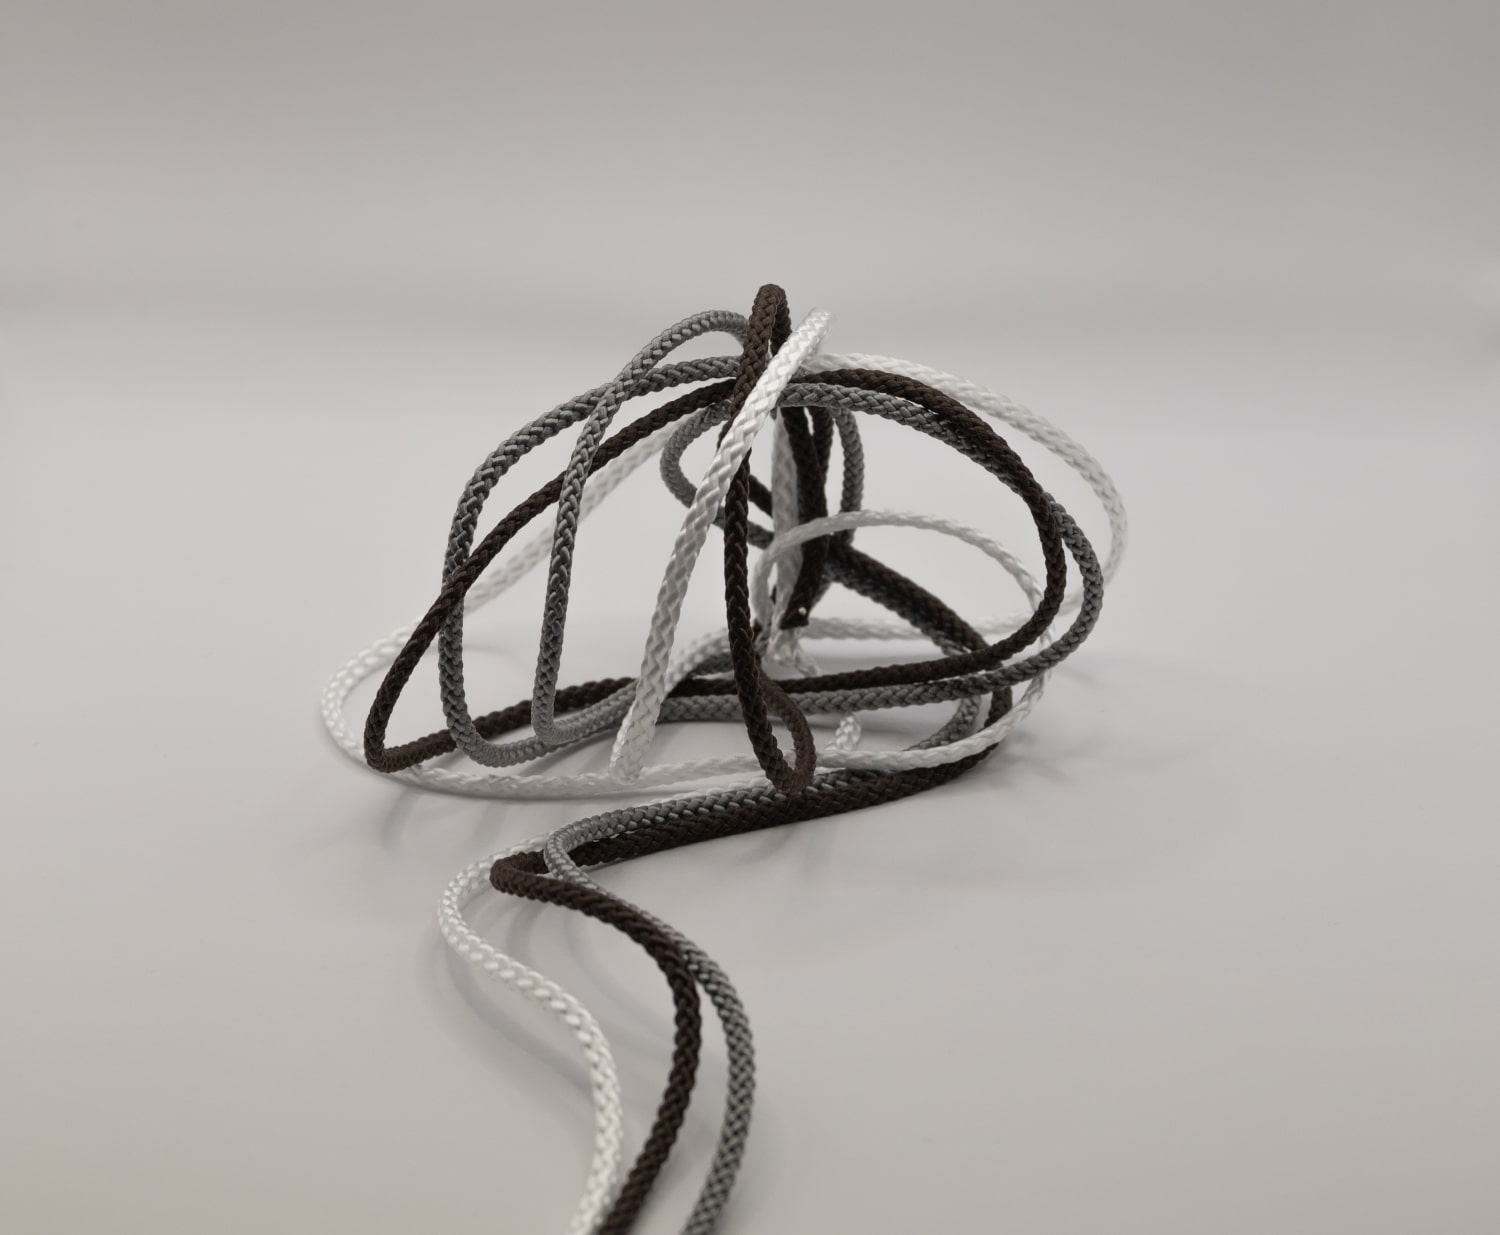 prolipropylene cords braided